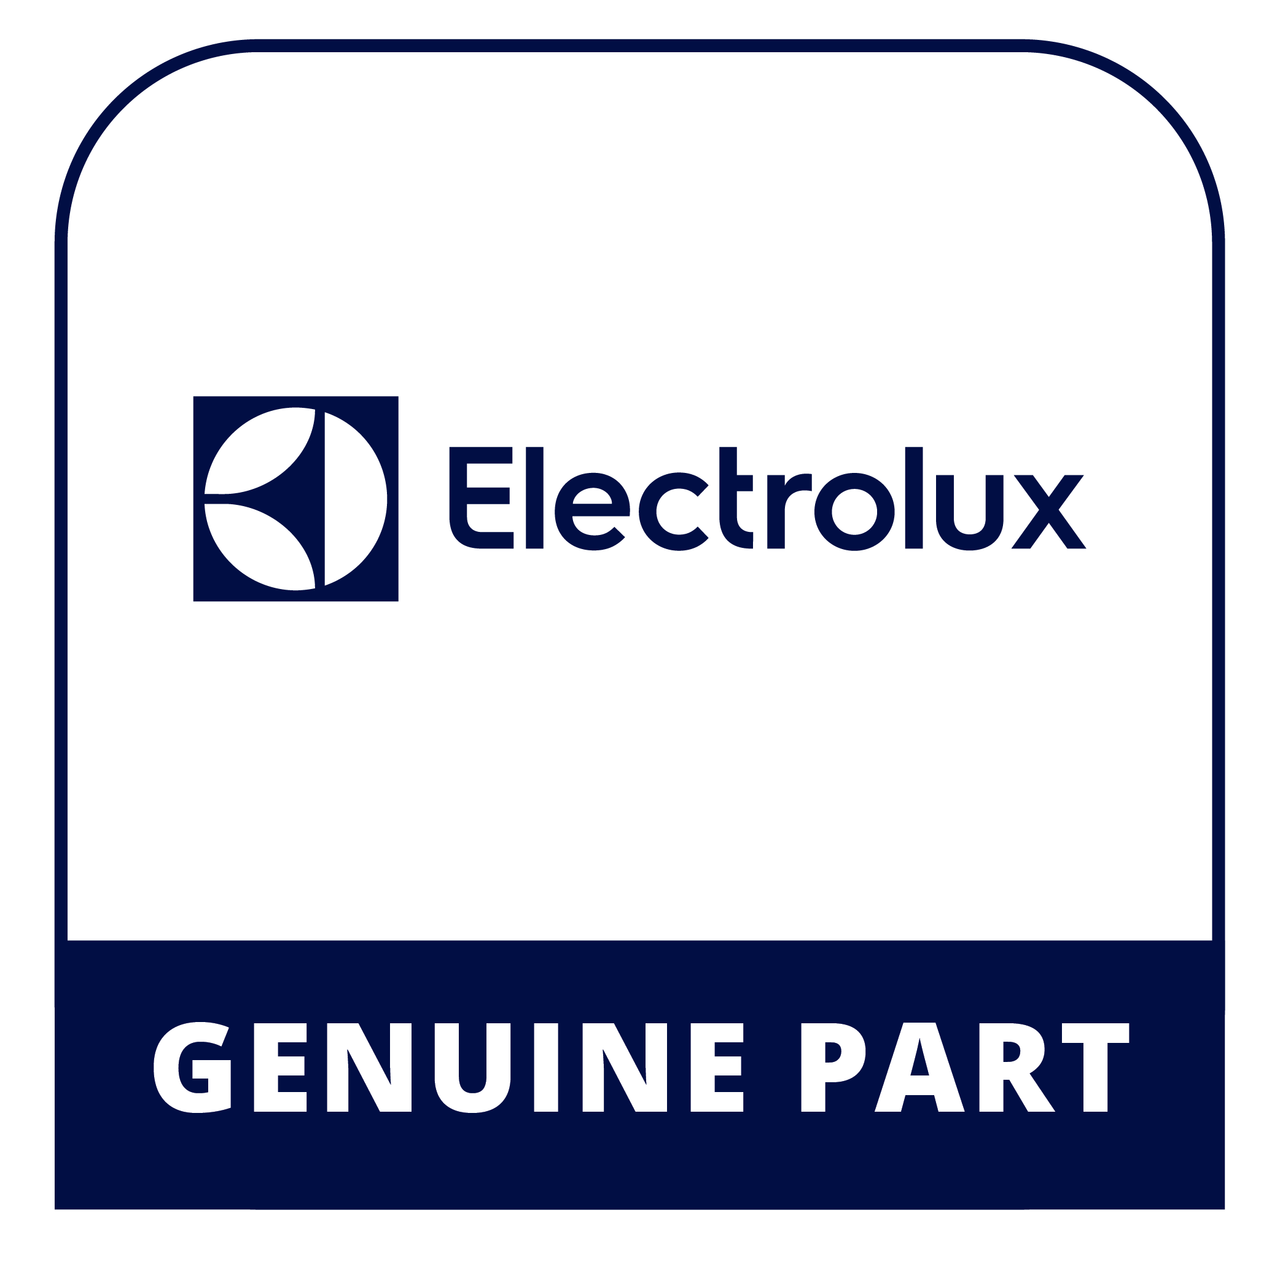 Frigidaire - Electrolux 5304498922 Cover - Genuine Electrolux Part